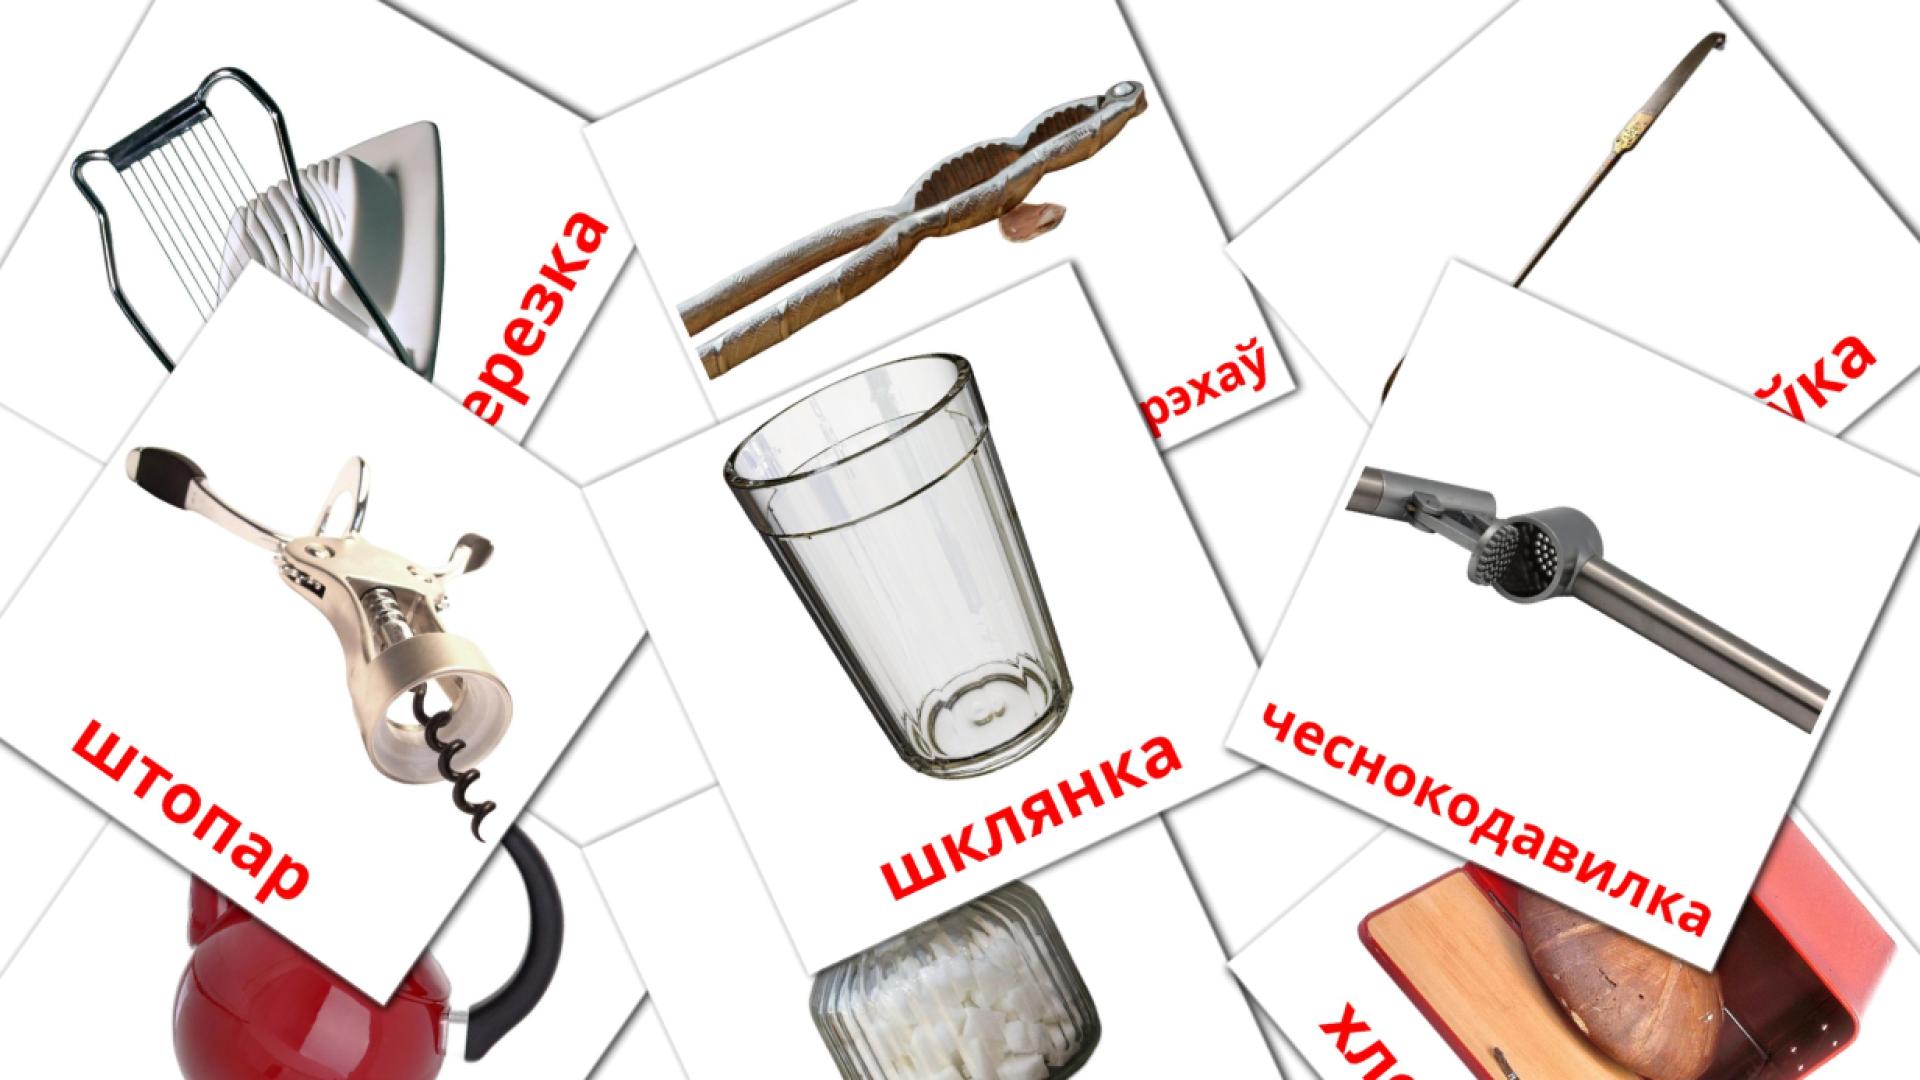 Кухня belarusian vocabulary flashcards